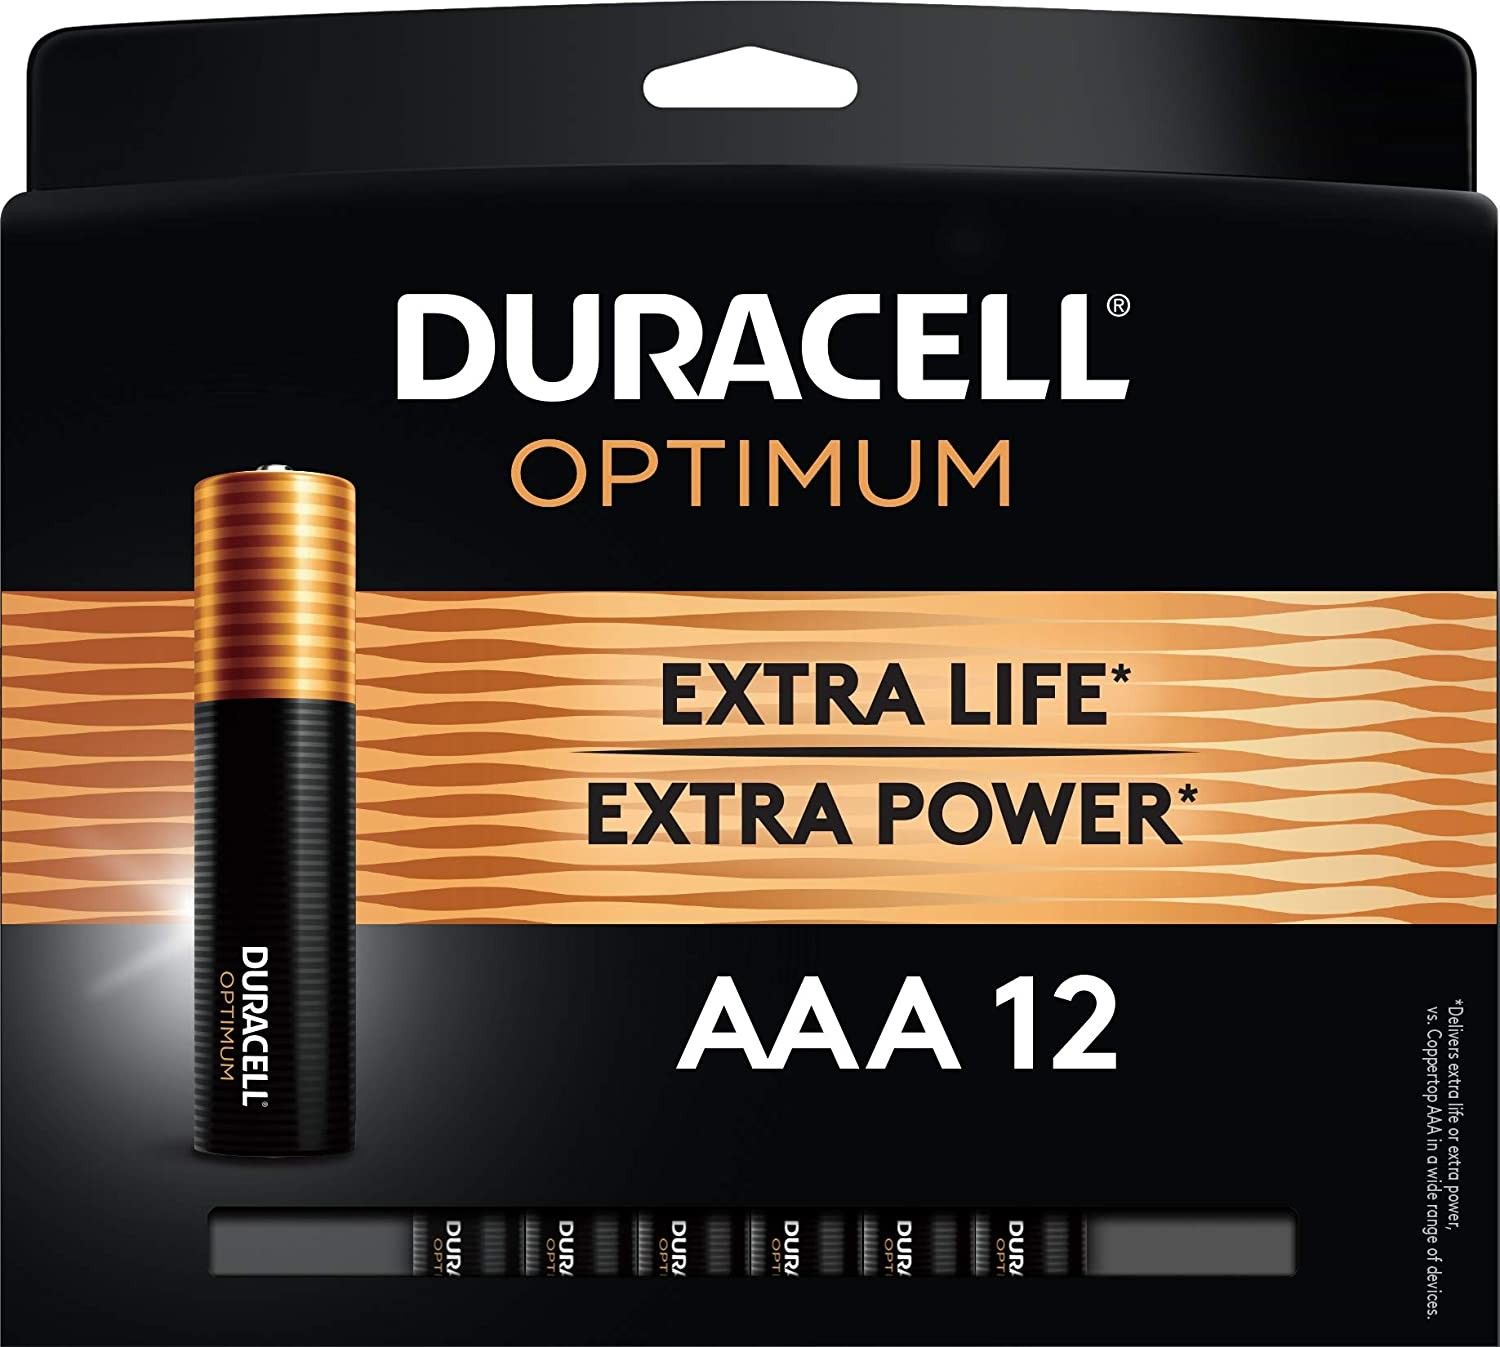 Package of 12 AAA Duracell Optimum batteries - duracell batteries